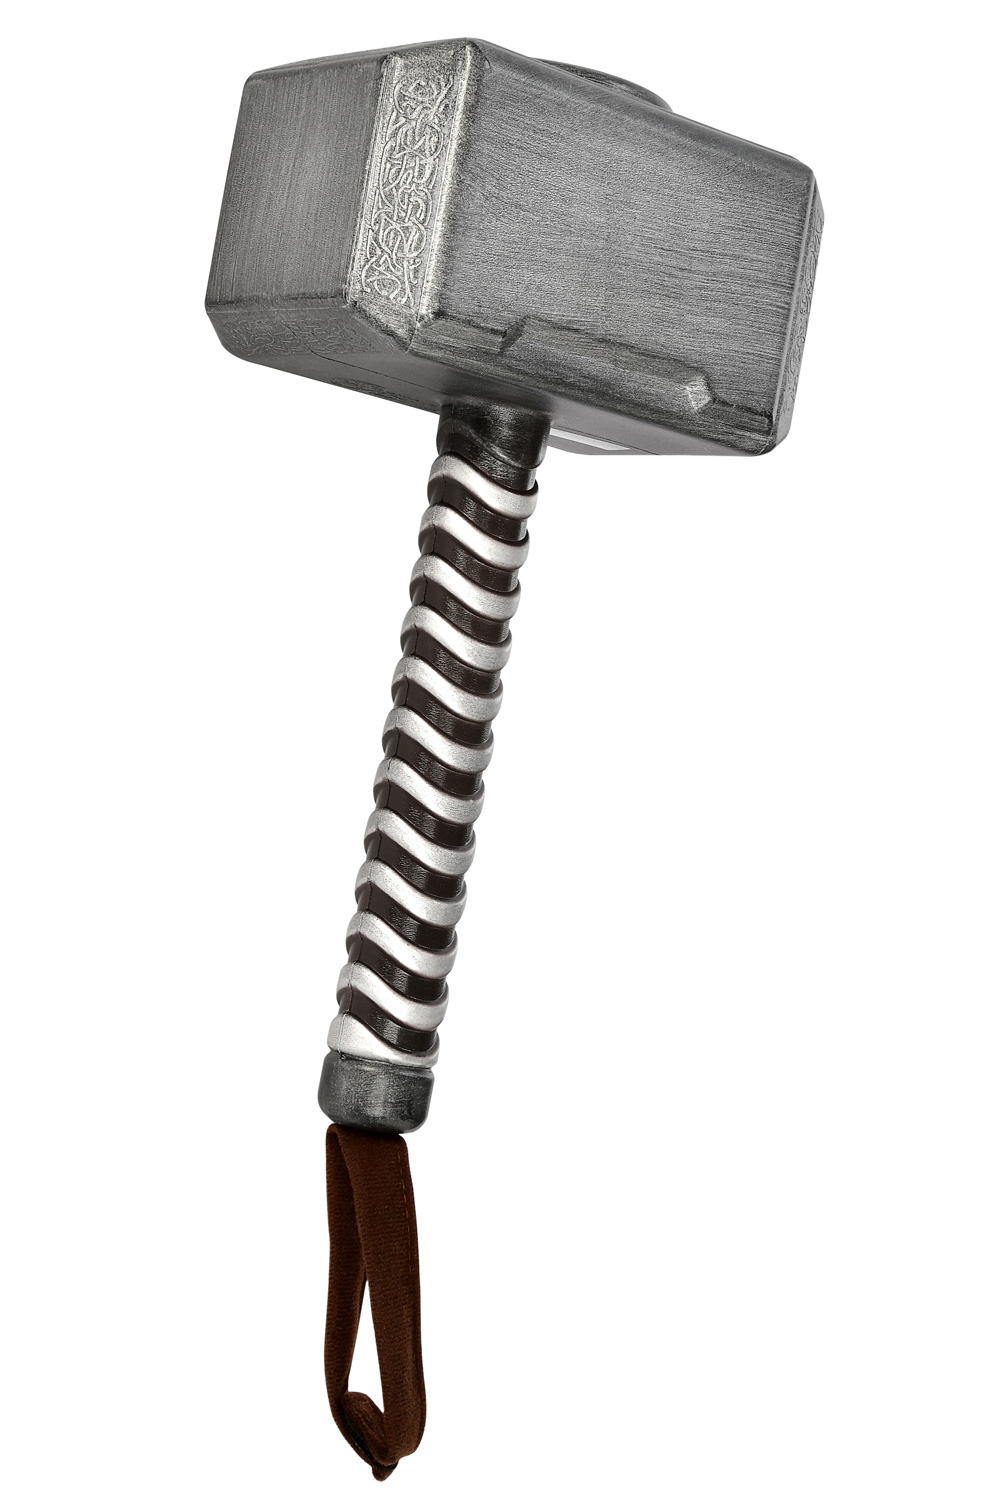 Bahaya Hammer Of Thor : Hammer of Thor Colombia, COMPRA AHORA OFERTA